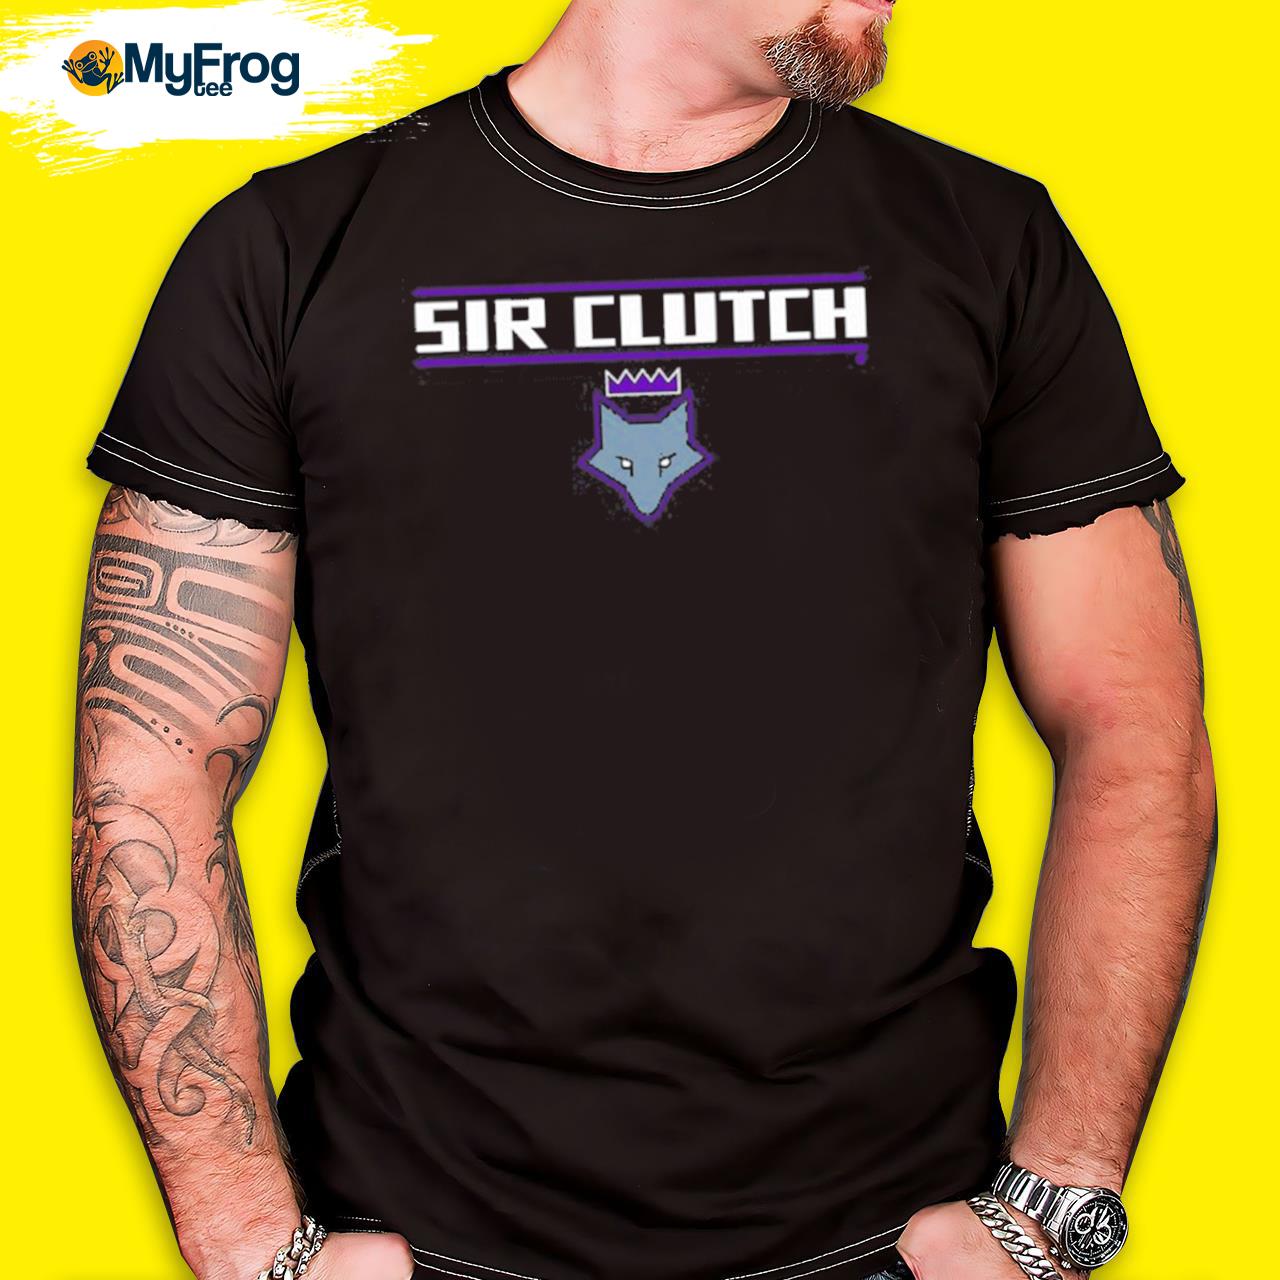 Sir Clutch T-shirt